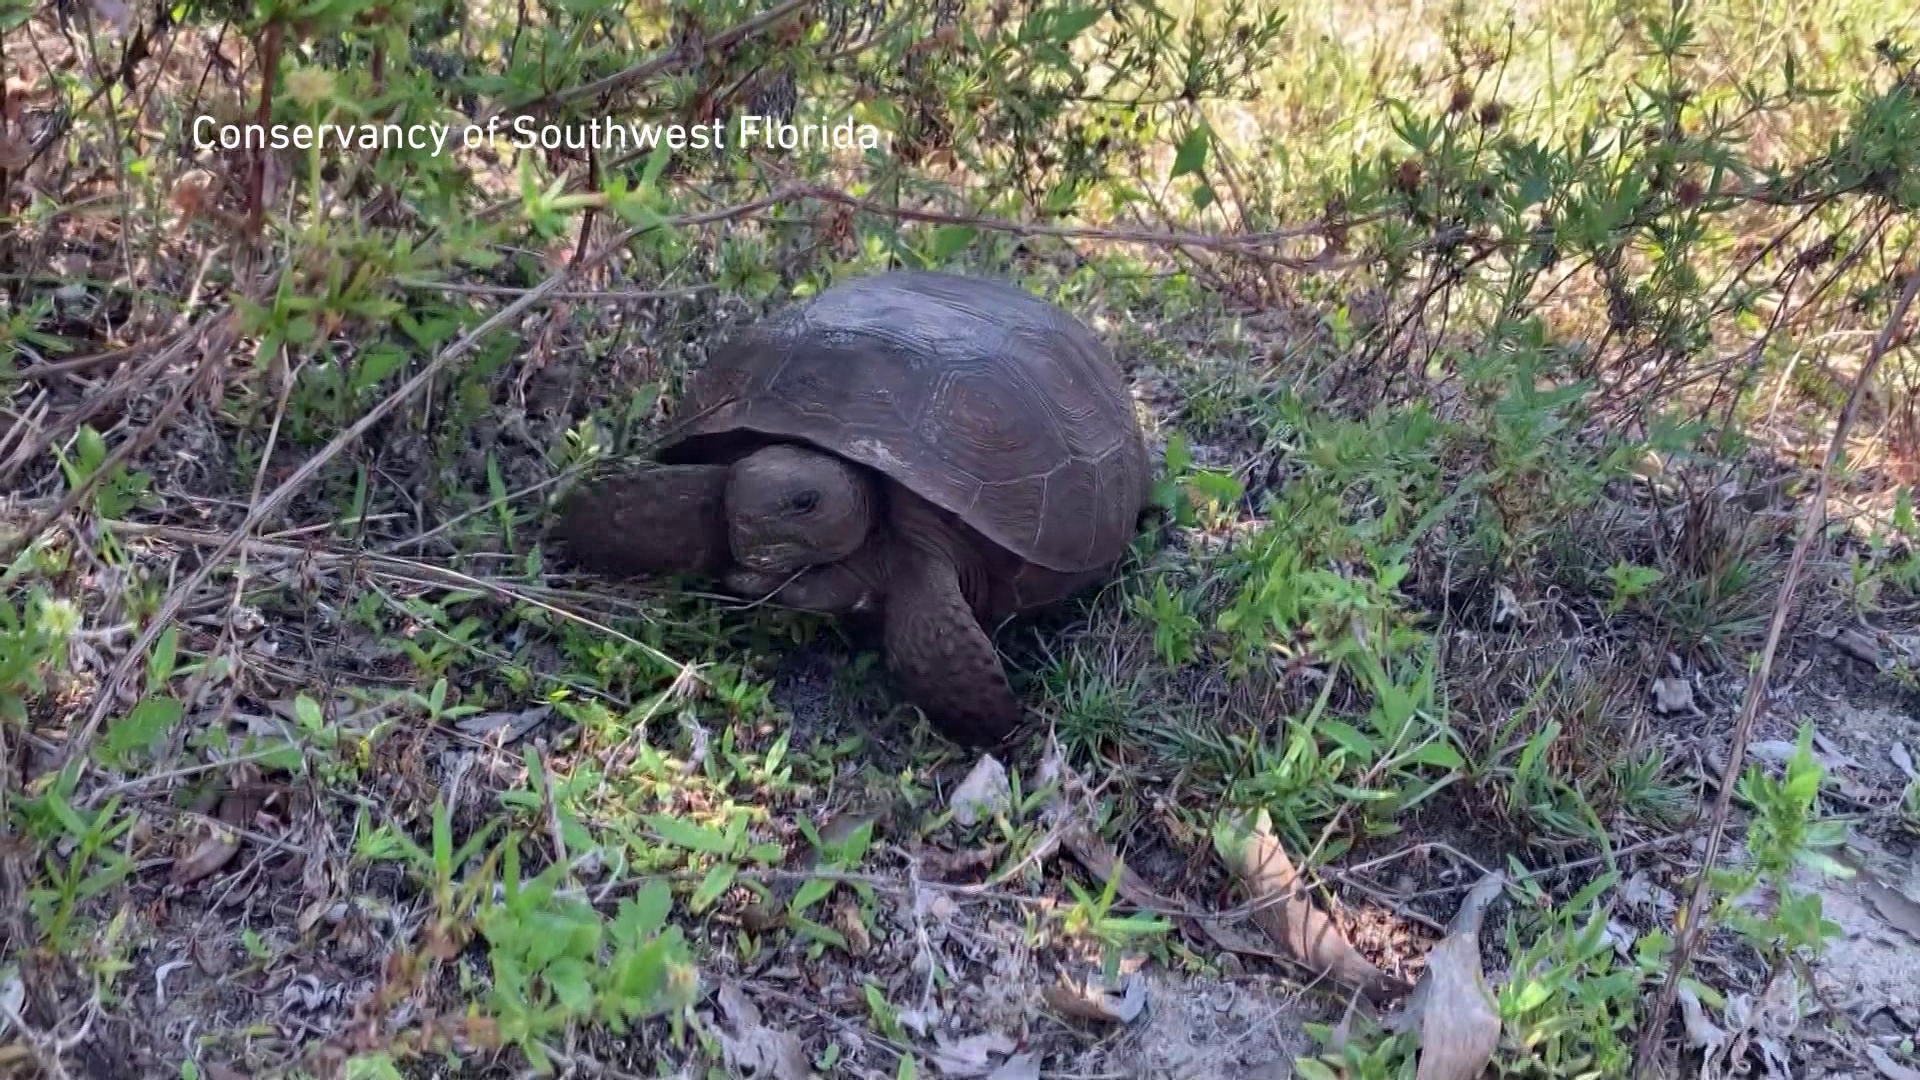 Gopher tortoise. (CREDIT: Conservancy of Southwest Florida)